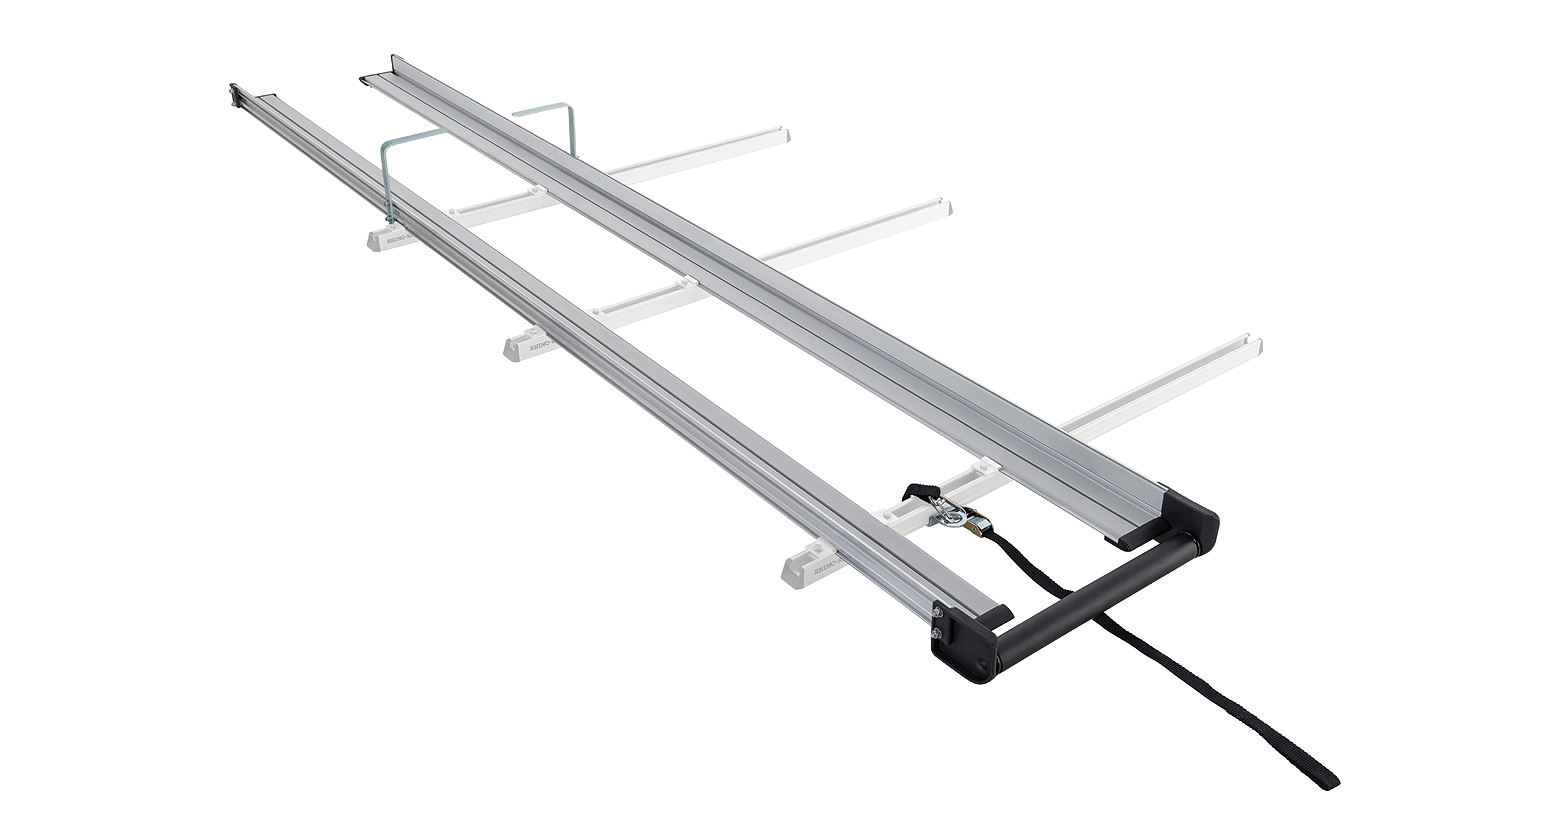 3.0m CSL Ladder Rack System with 470mm Roller